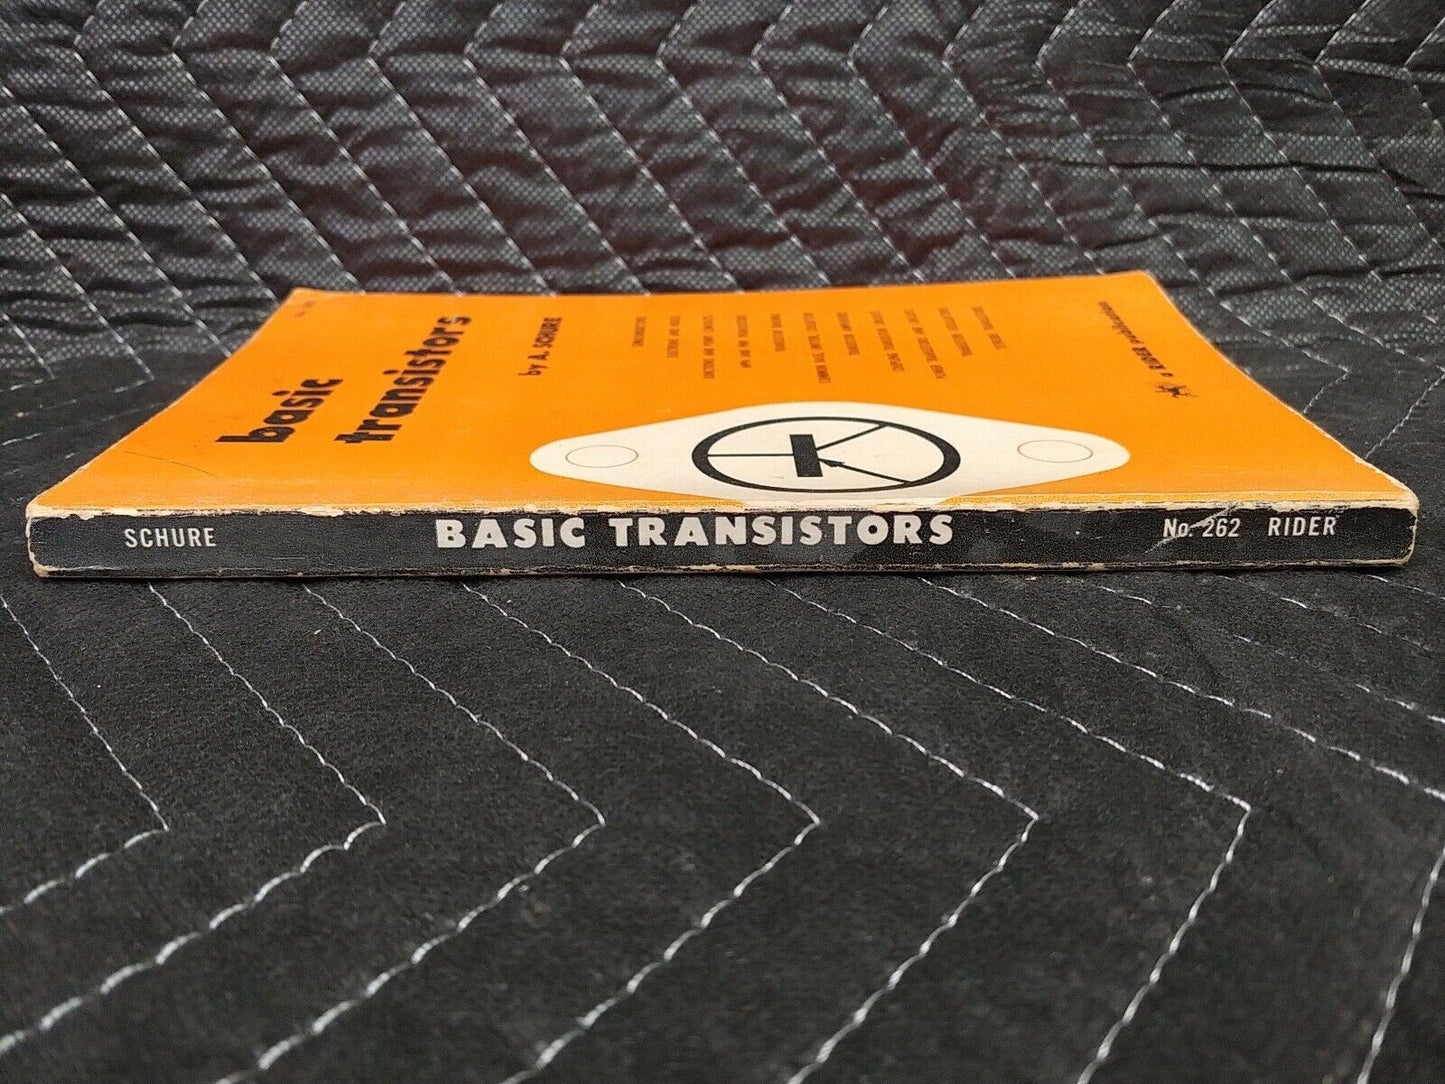 Basic Transistors by A. Schure 1961 Rider Publishing No. 262